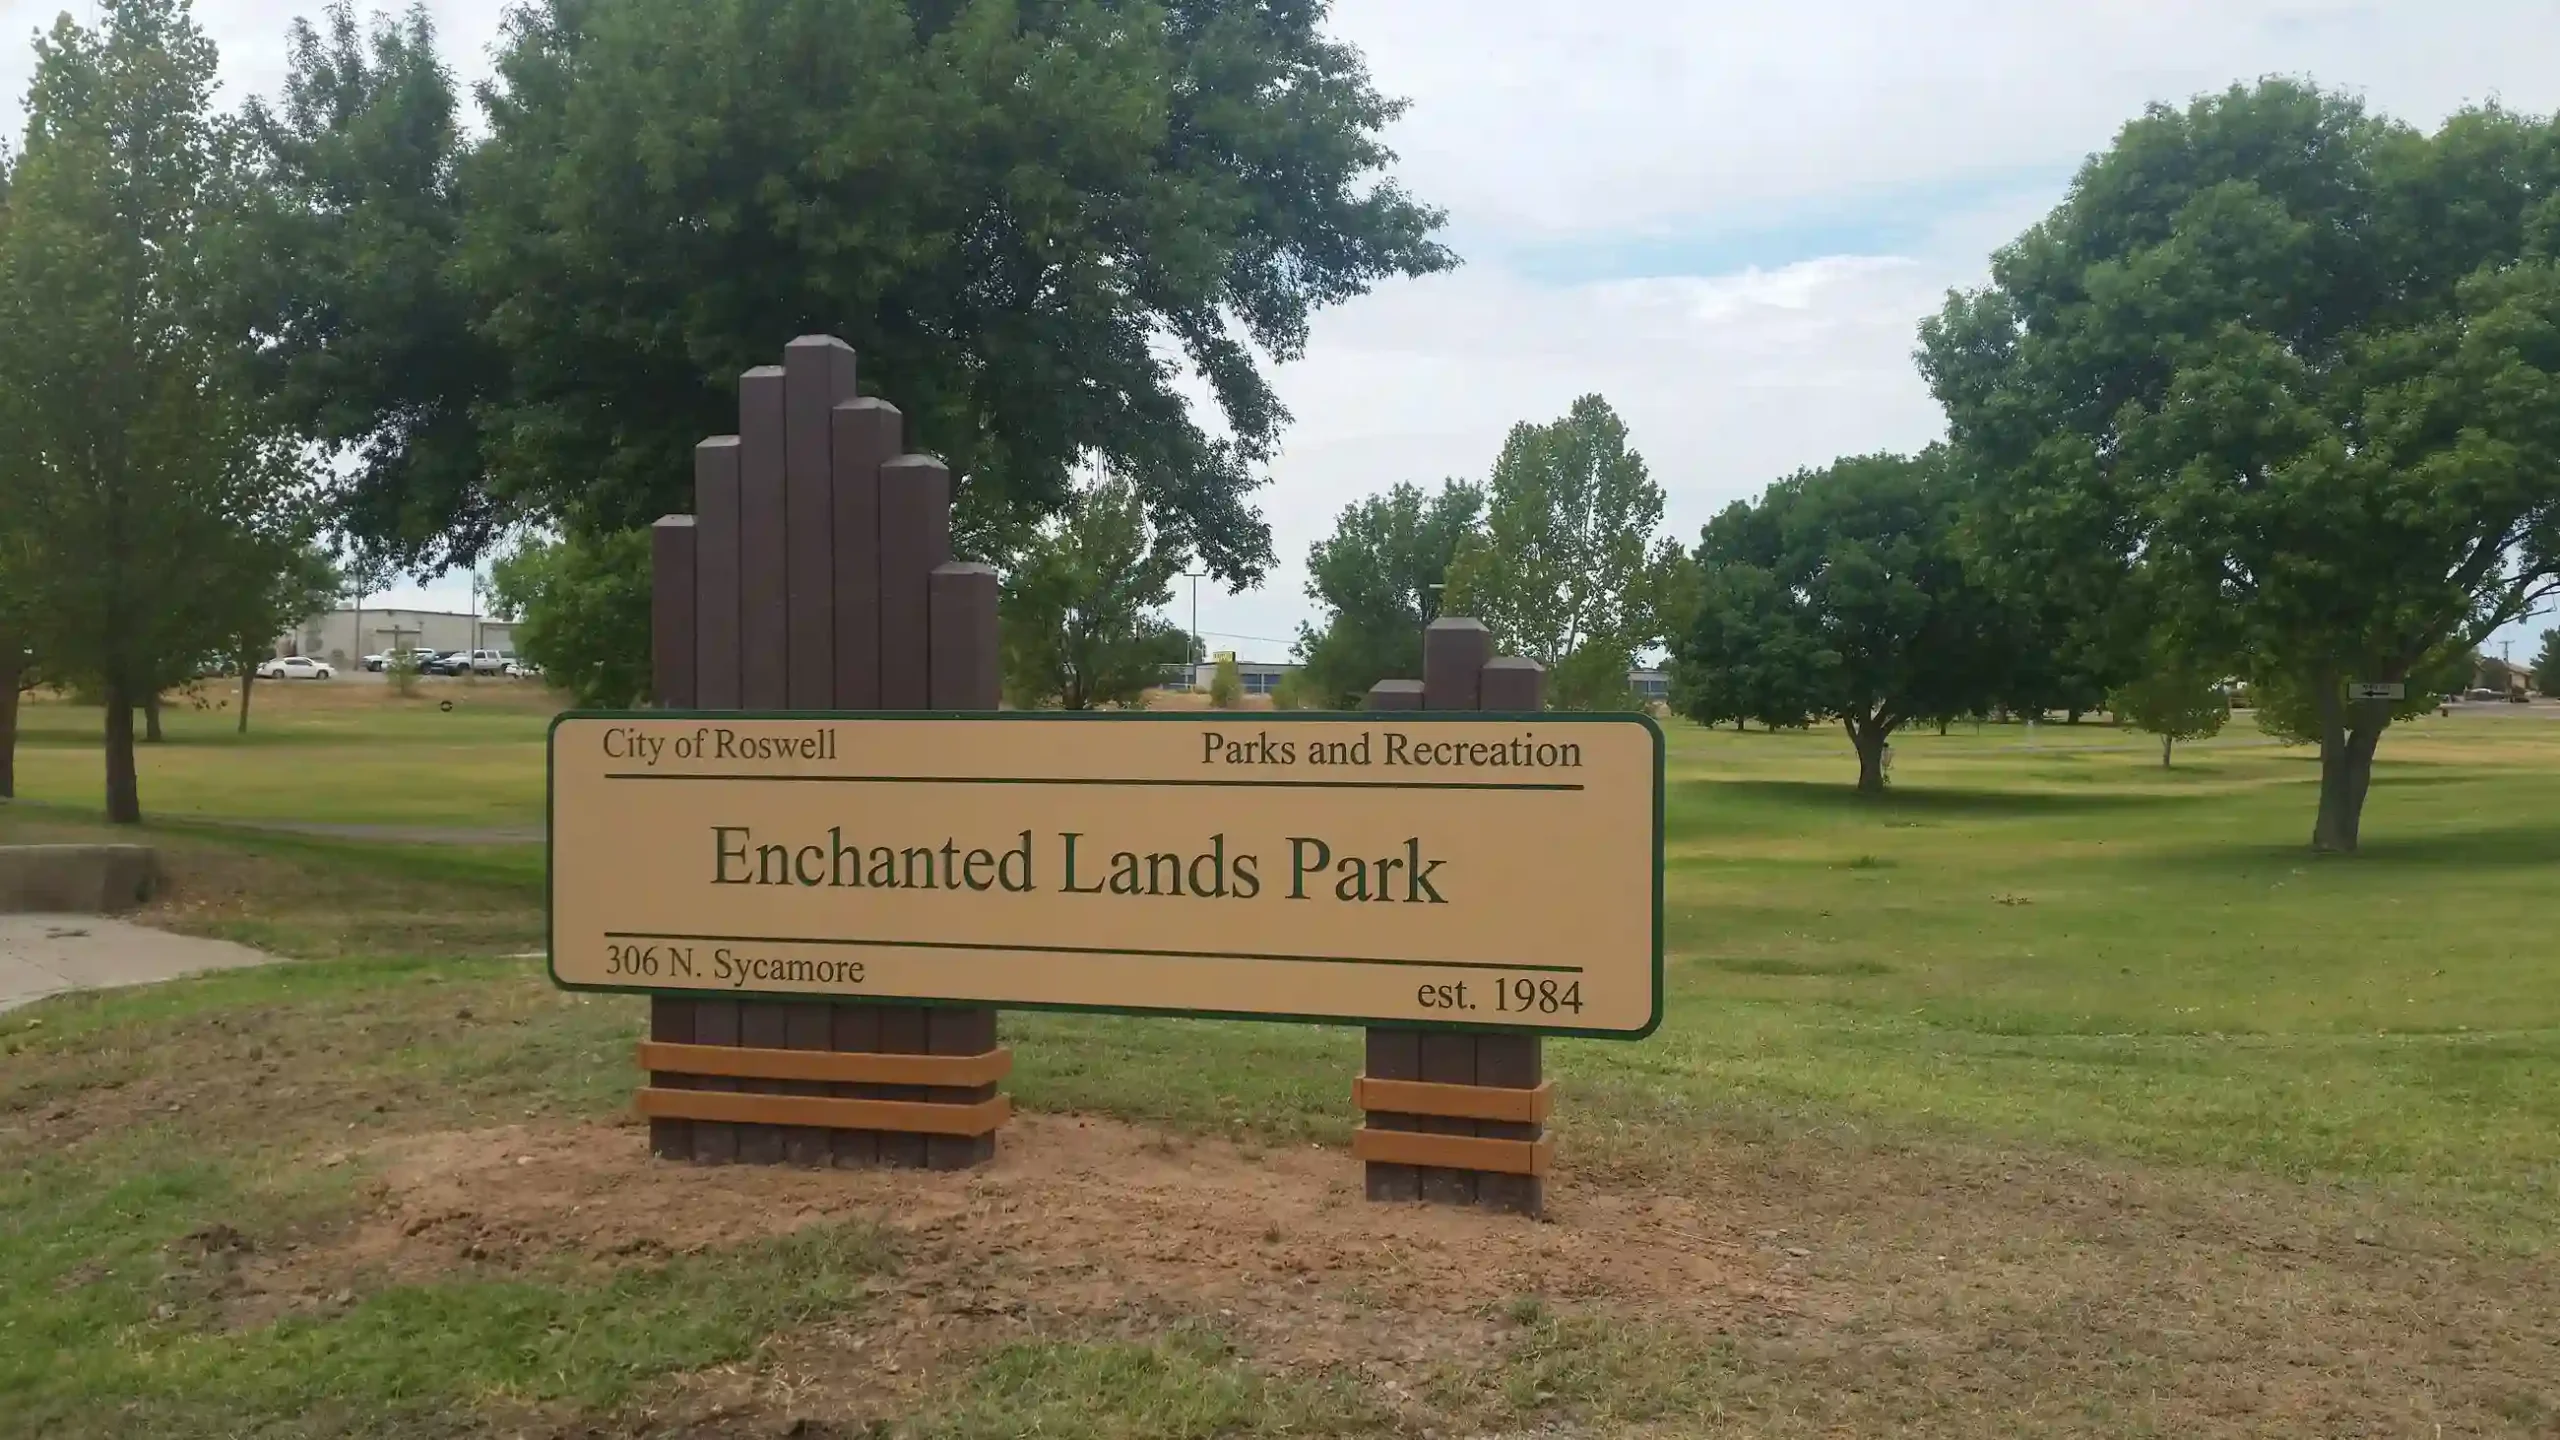 Enchanted Lands Park